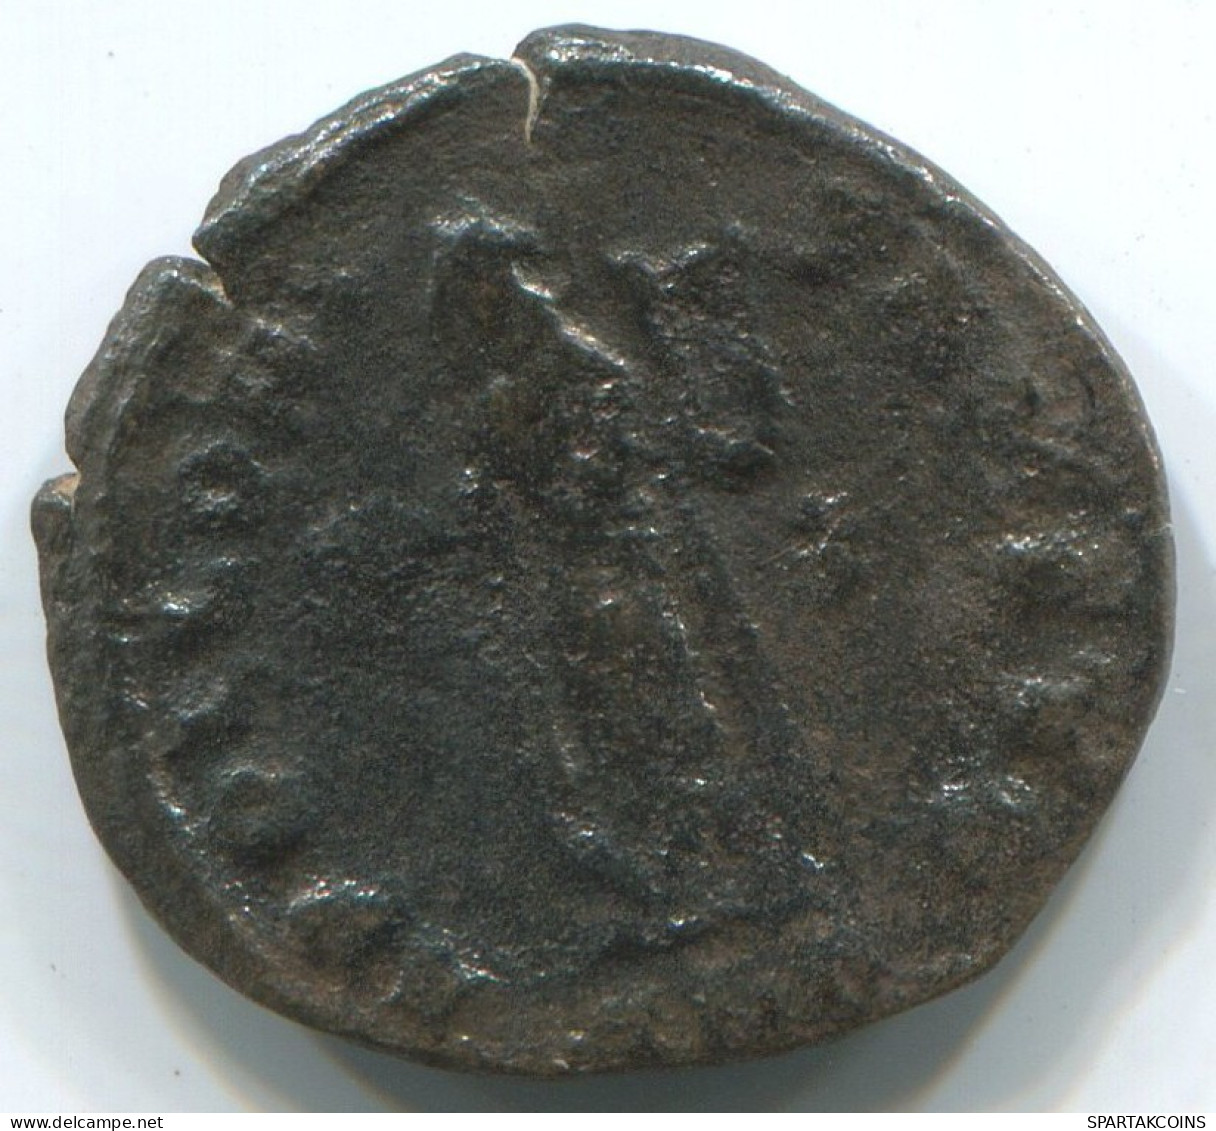 LATE ROMAN EMPIRE Pièce Antique Authentique Roman Pièce 1.3g/18mm #ANT2351.14.F.A - Der Spätrömanischen Reich (363 / 476)